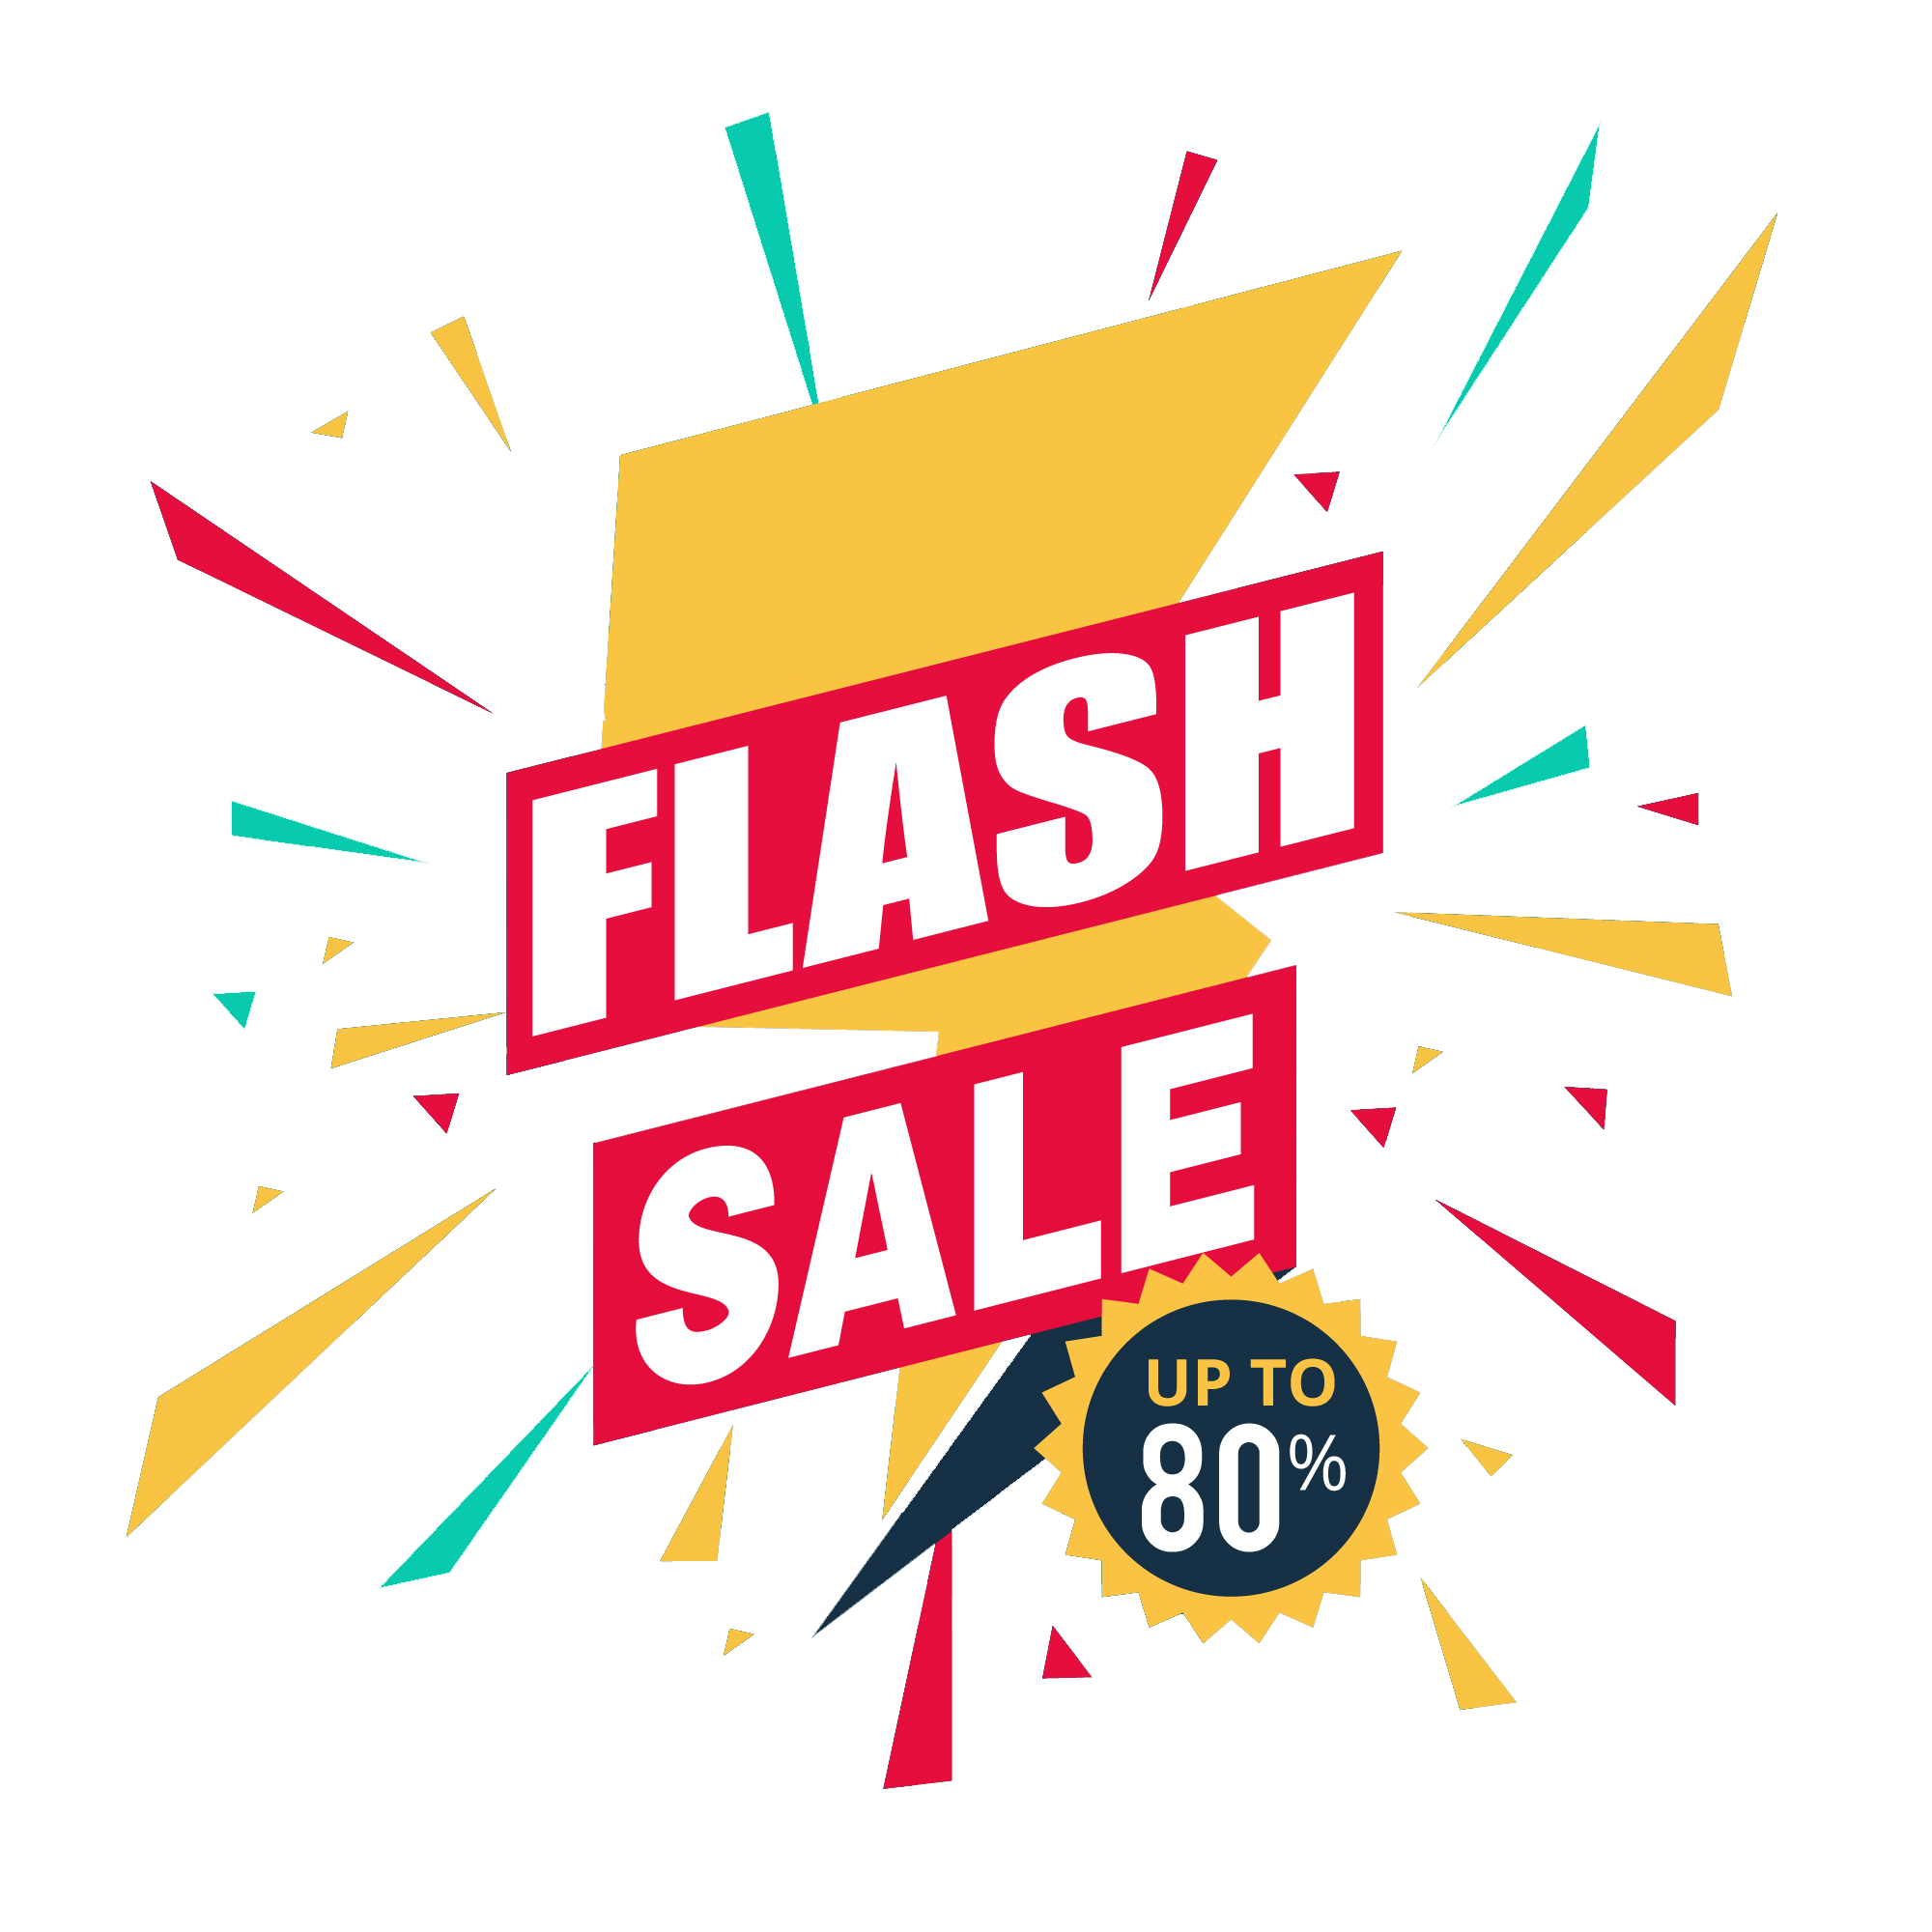 Flash Sale PNG Image HD